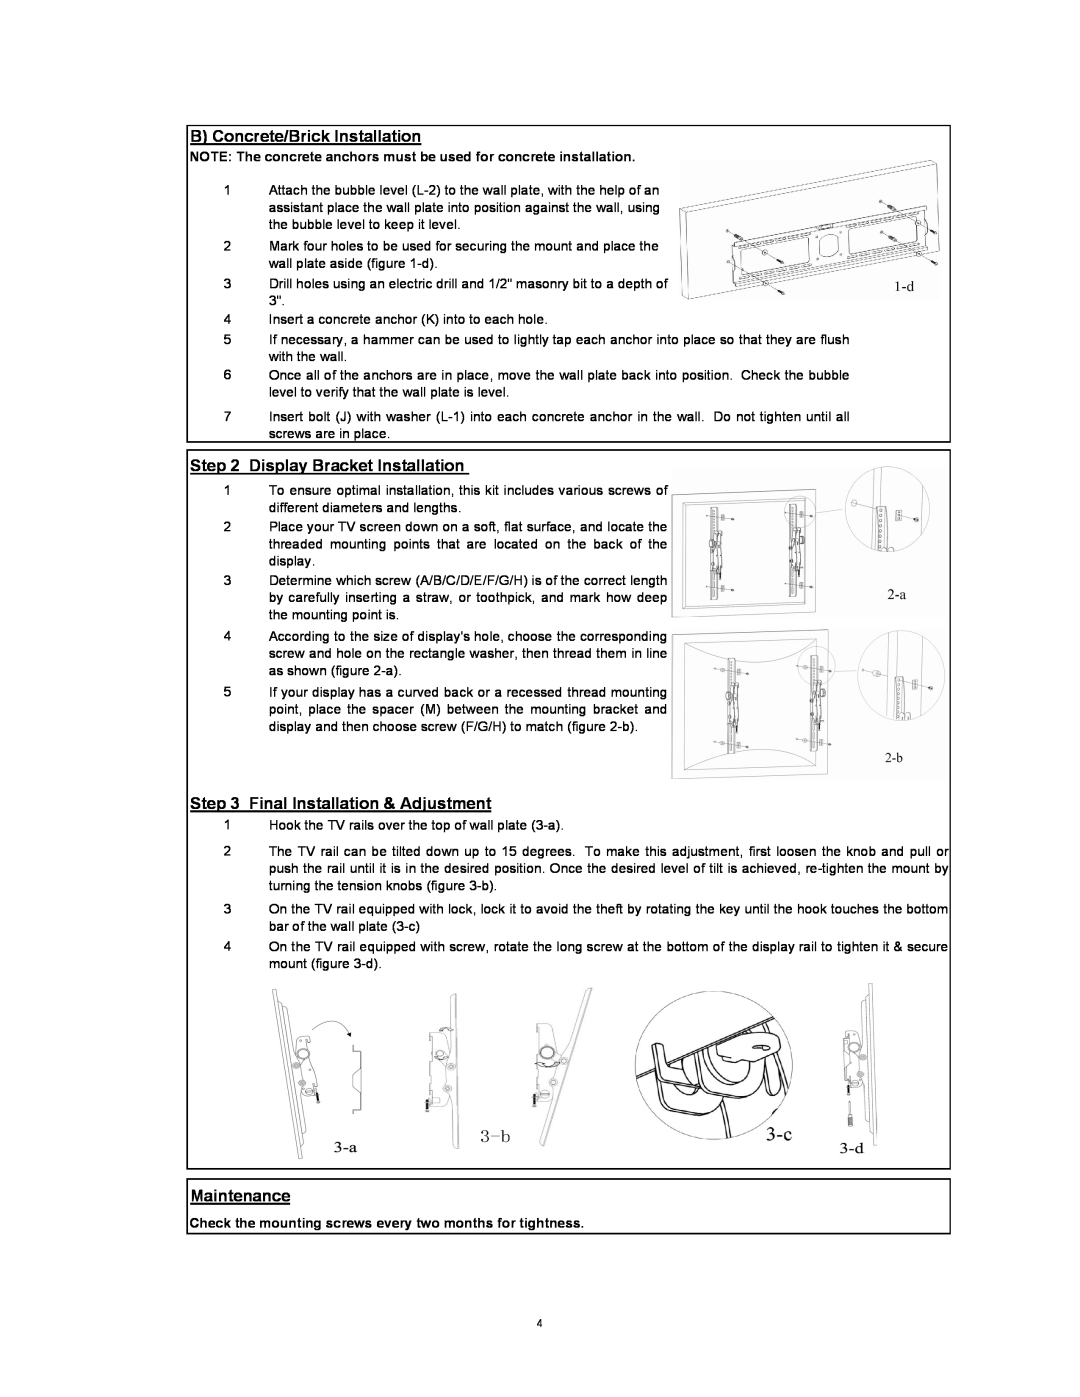 SIIG 04-0529D B Concrete/Brick Installation, Display Bracket Installation, Final Installation & Adjustment, Maintenance 